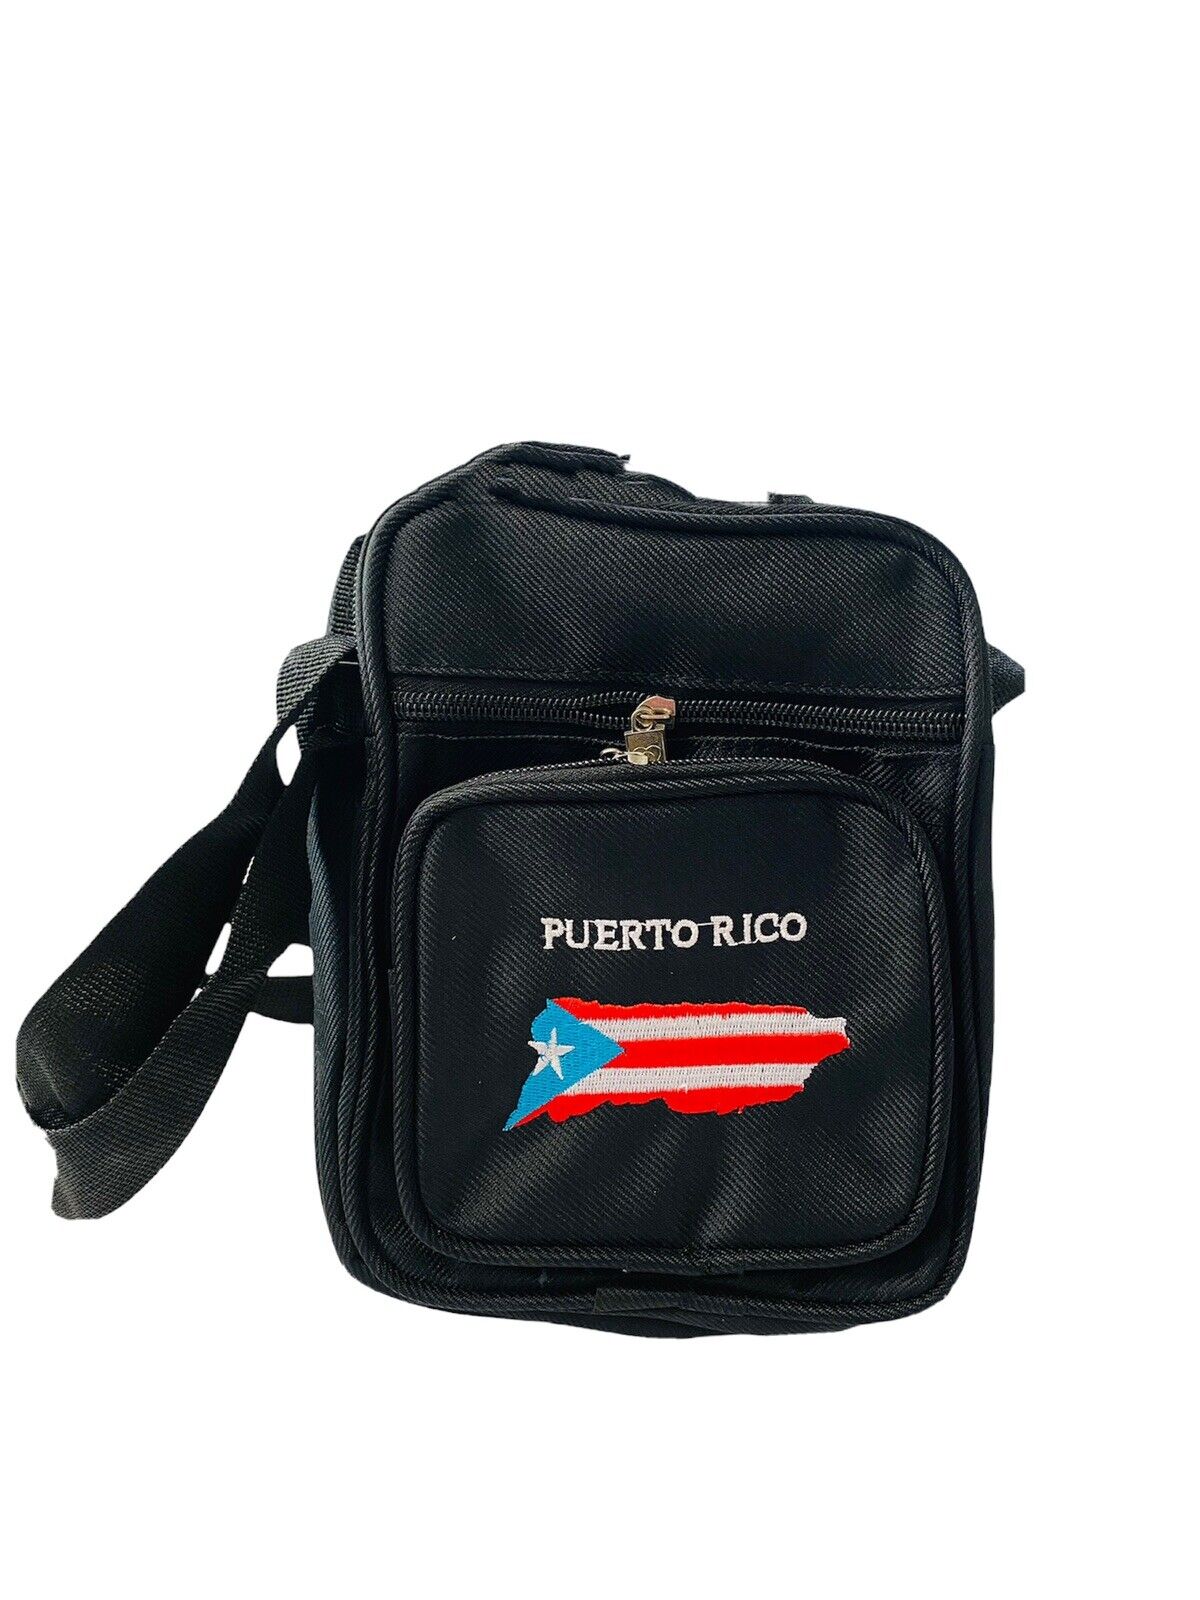 Puerto Rico Map Carrier or Shoulder Travel Bag-LOTS of POCKETS 